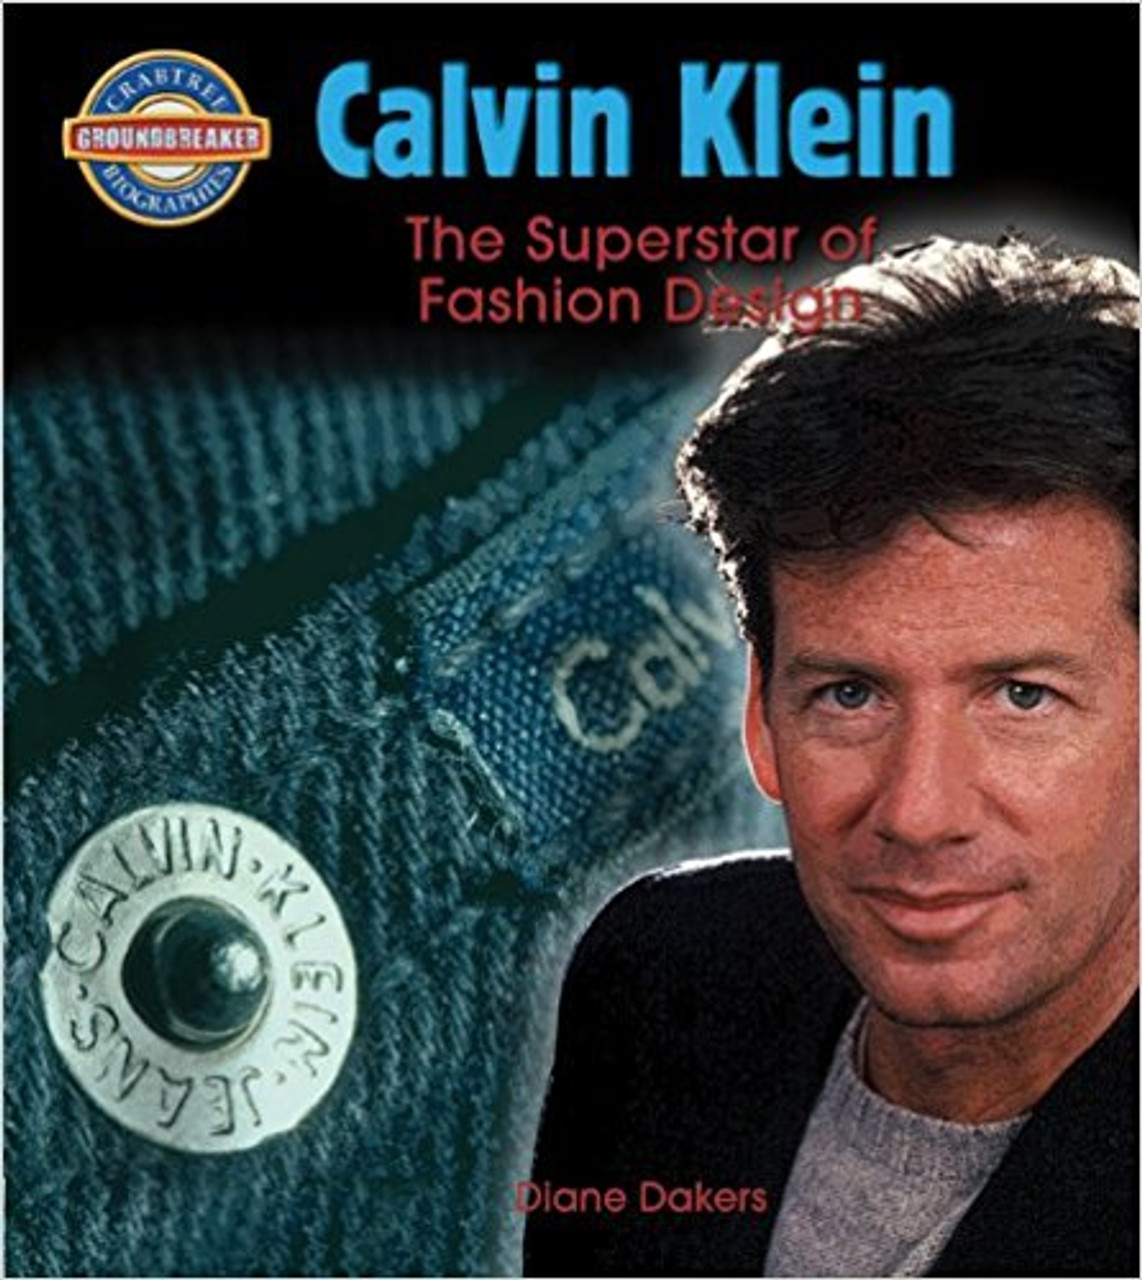 Calvin Klein: The Superstar of Fashion Design by Diane Dakers